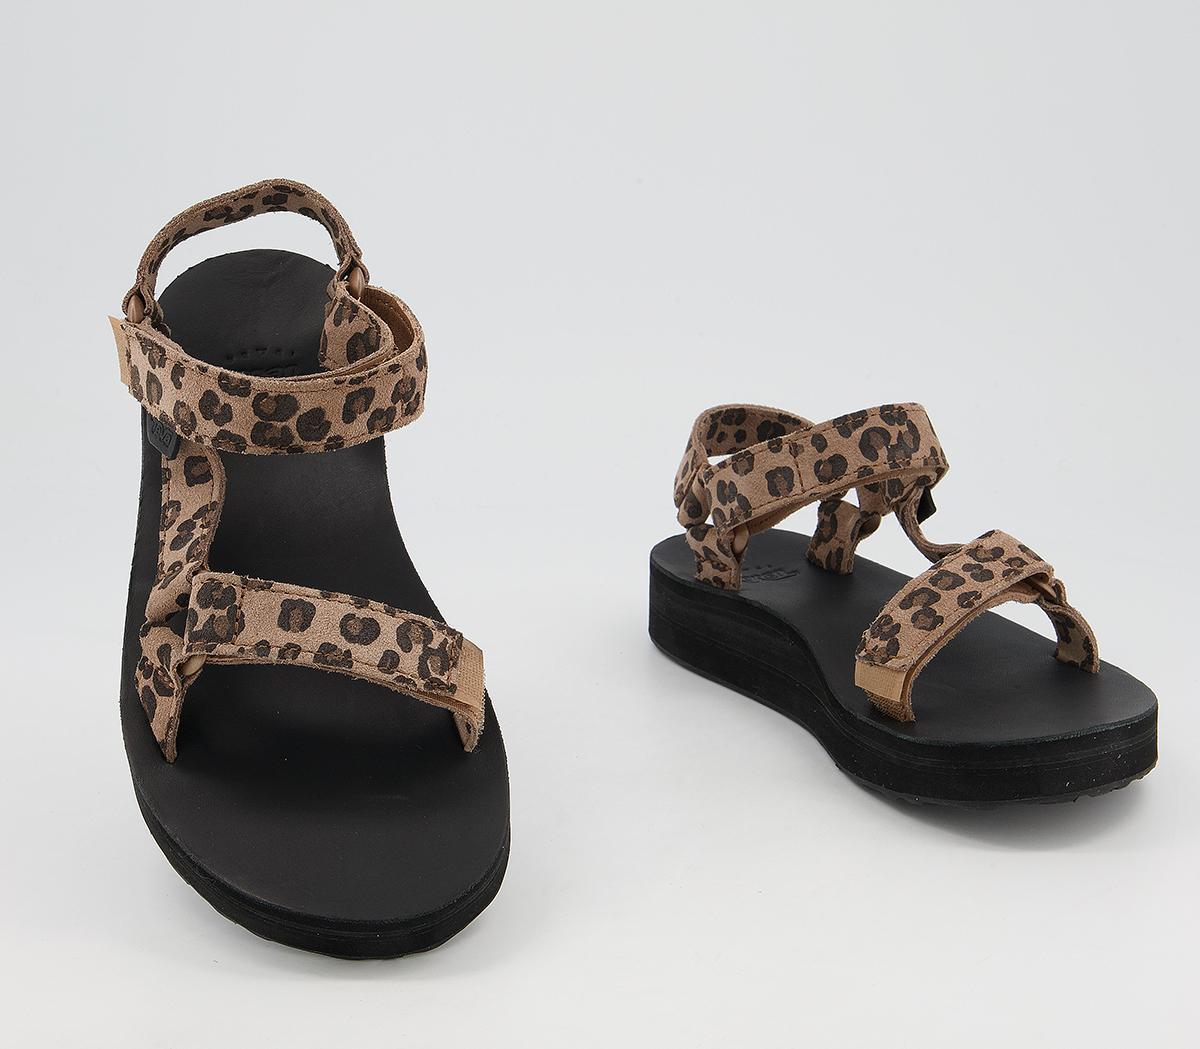 Teva Midform Universal Leather Sandals Leopard - Women’s Sandals